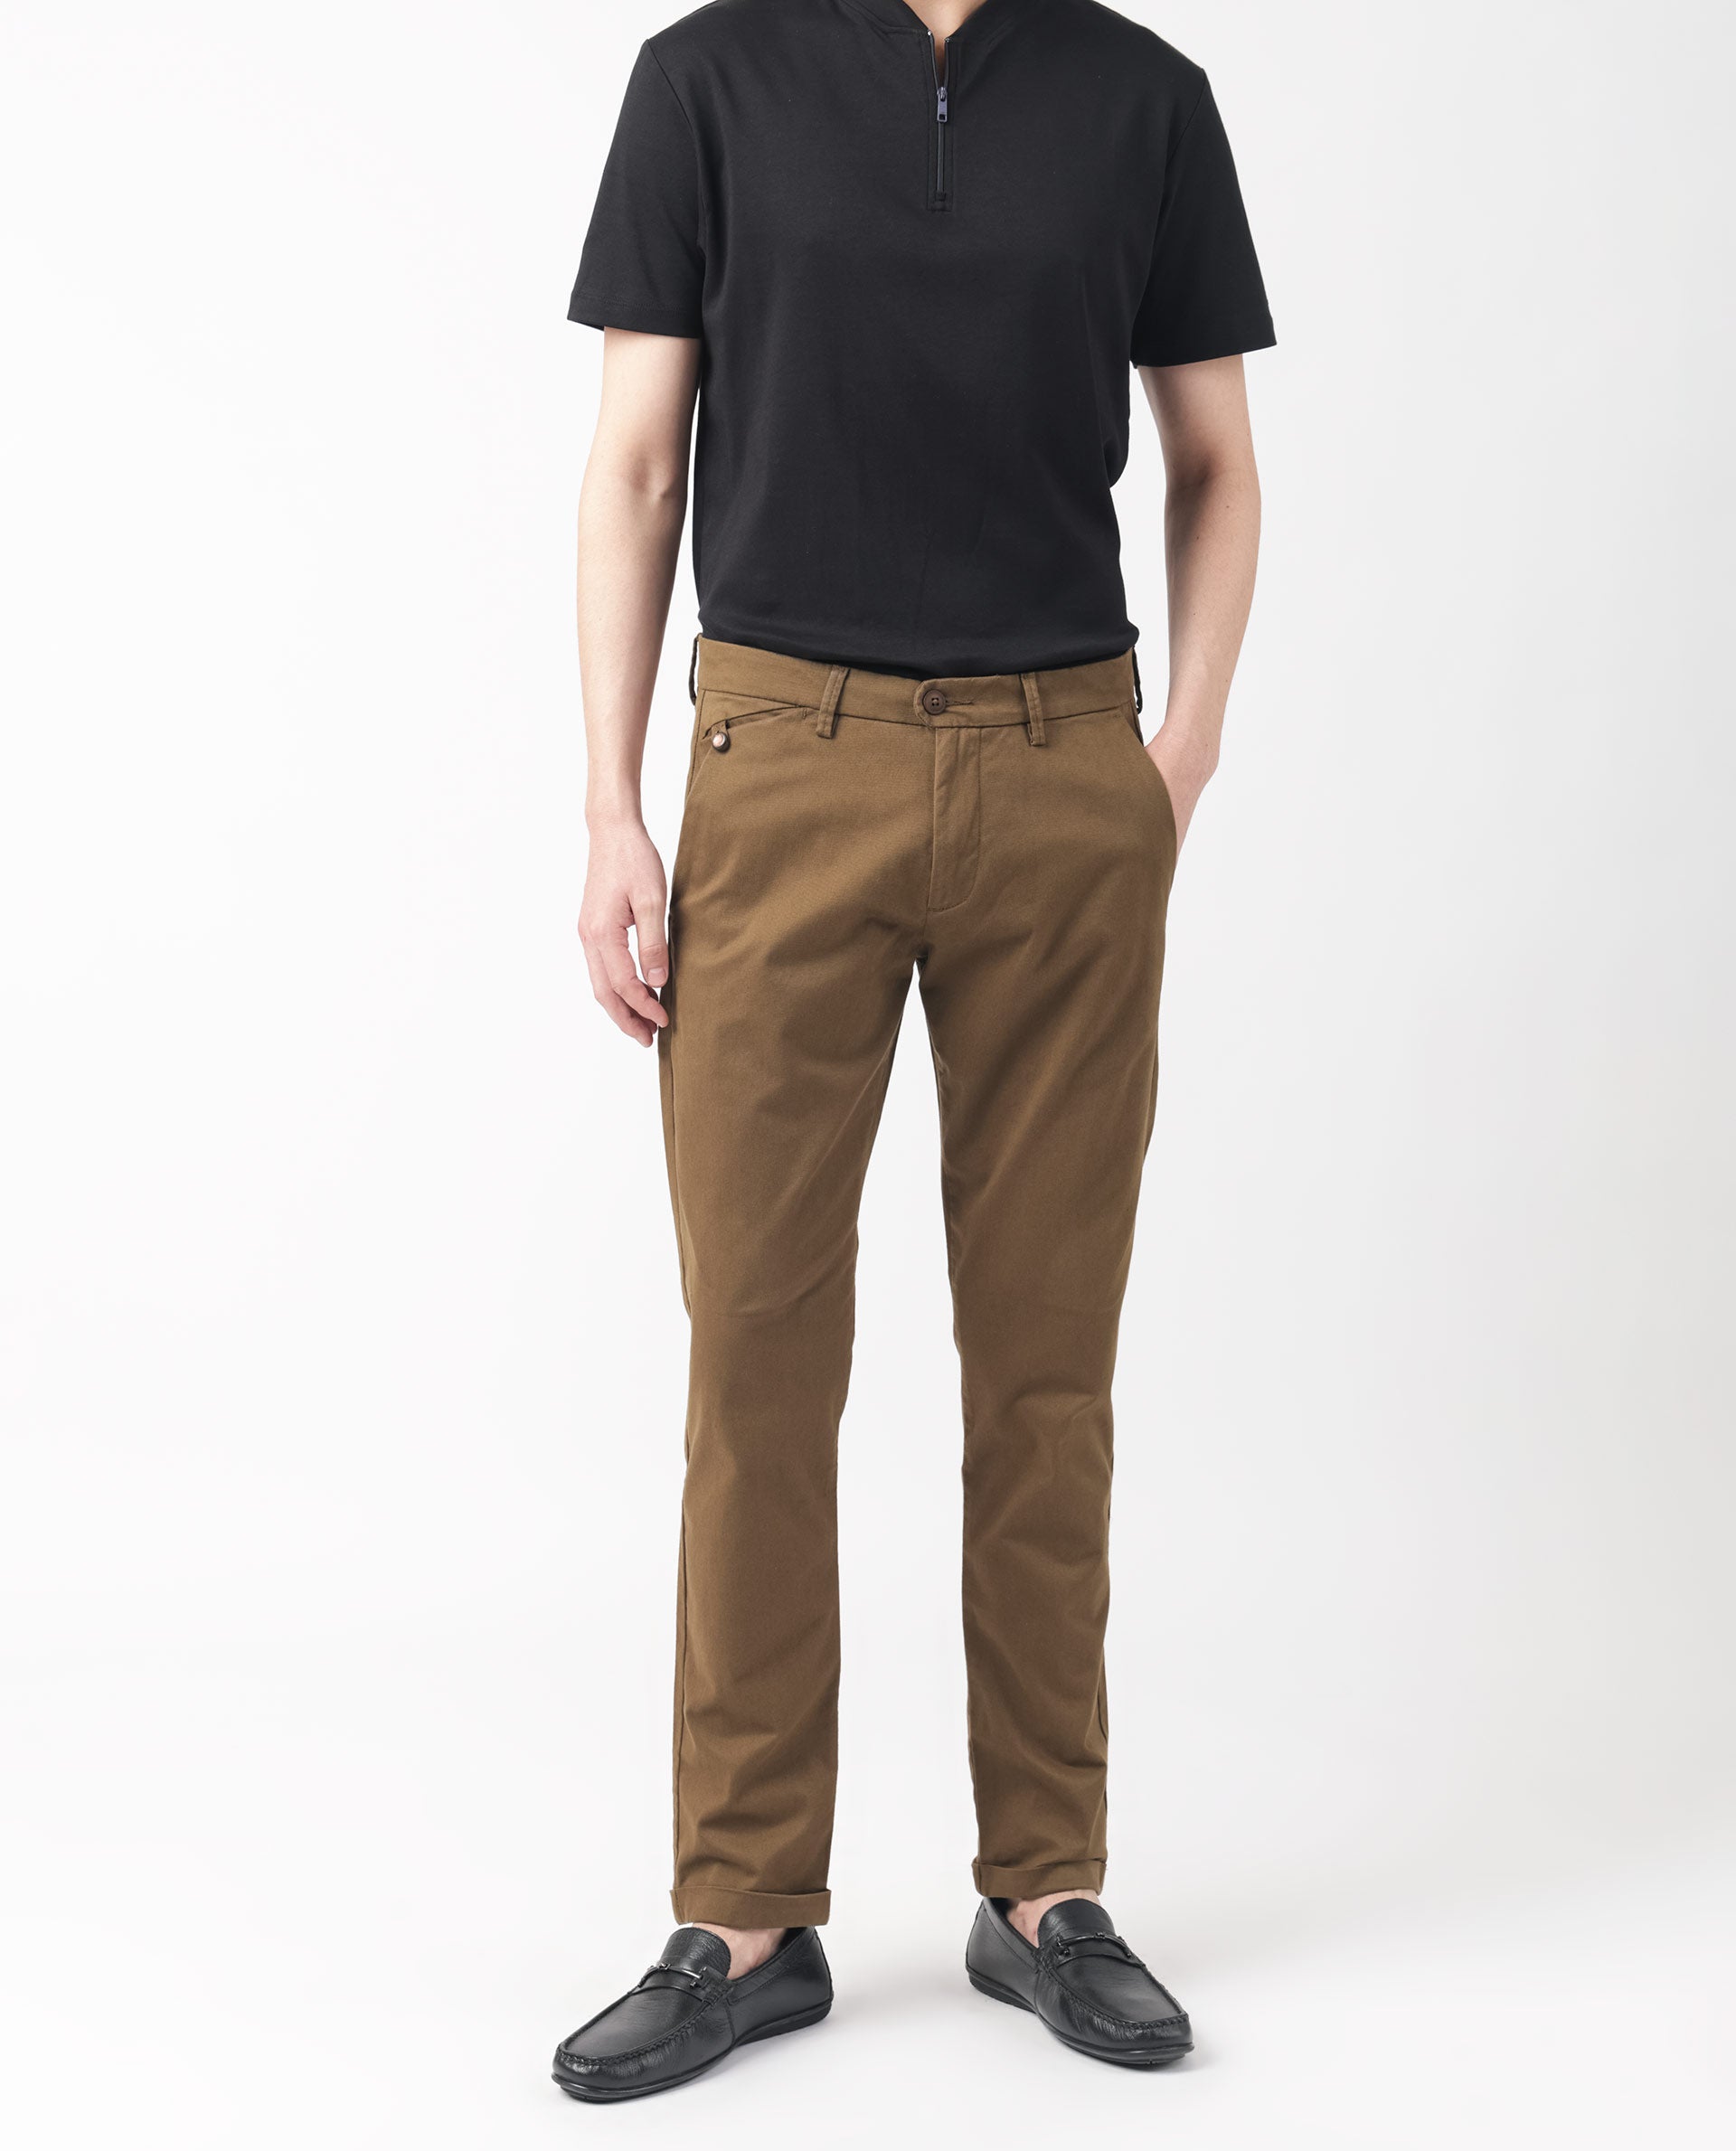 Buy Dark Brown Trousers  Pants for Men by Red chief Online  Ajiocom